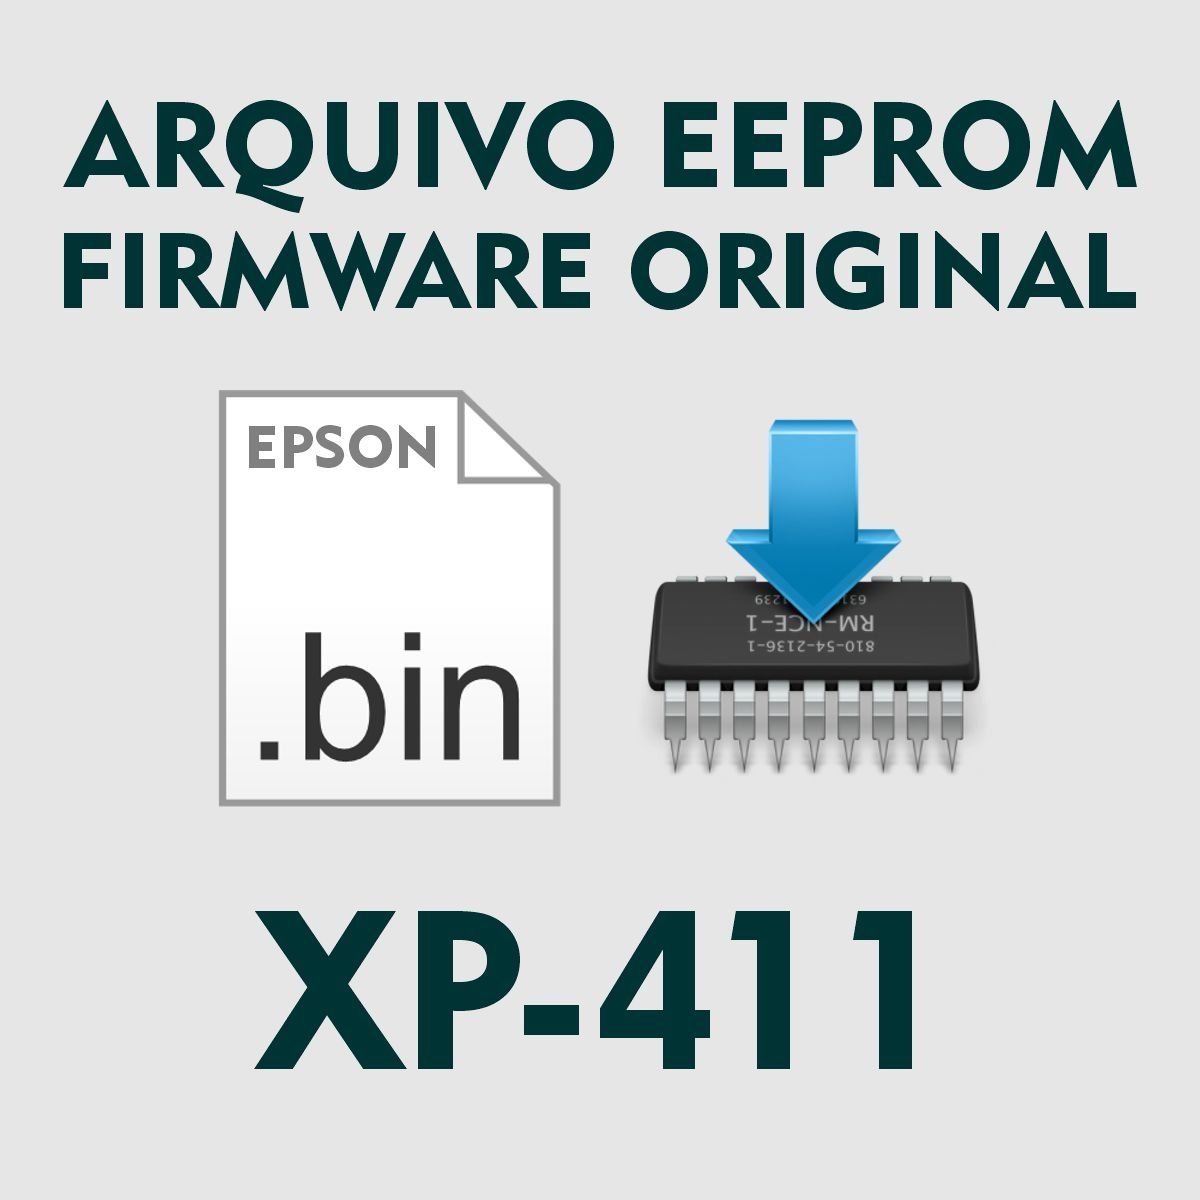 Epson XP-411 | Arquivo de Eeprom Firmware .bin - Original